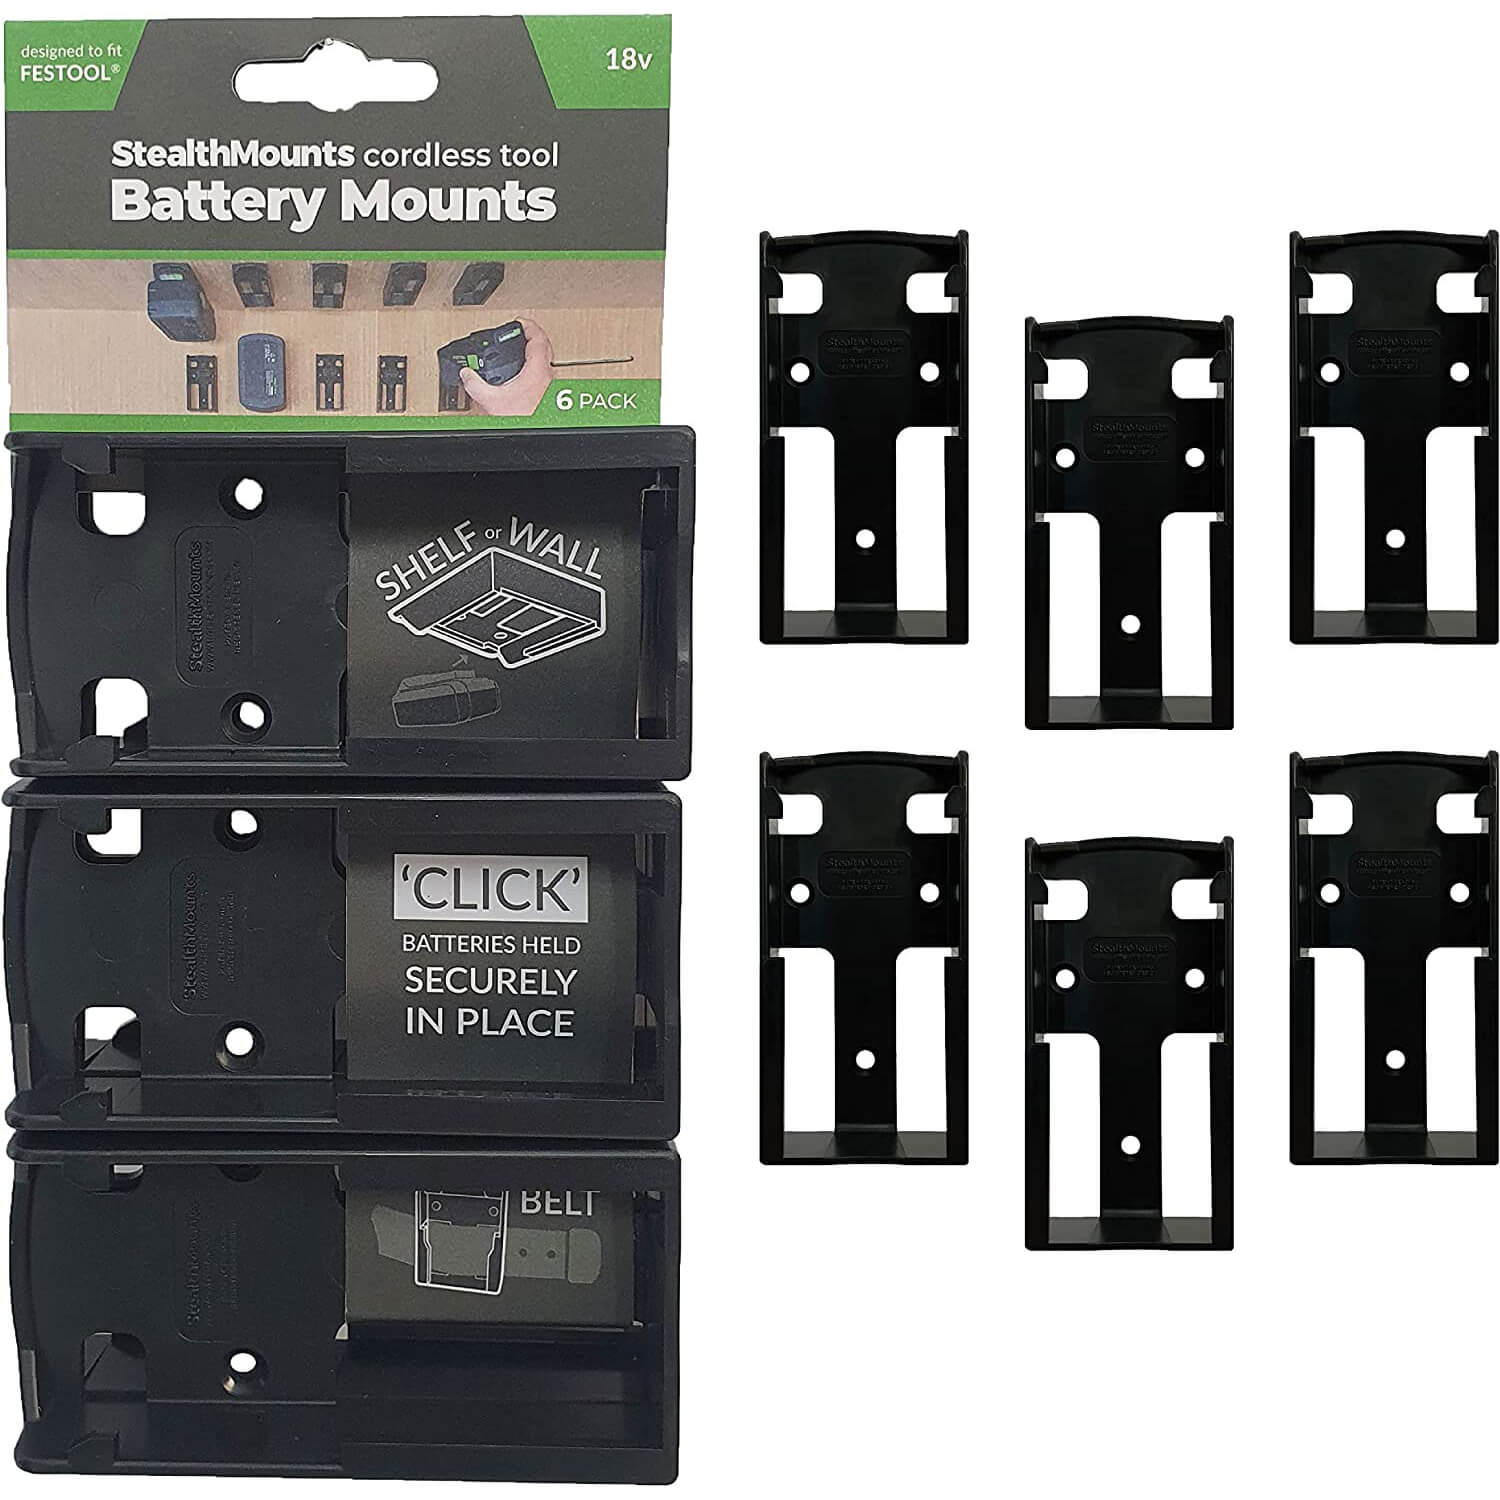 Image of Stealth Mounts 6 Pack Battery Mounts For Festool 18V Batteries Black